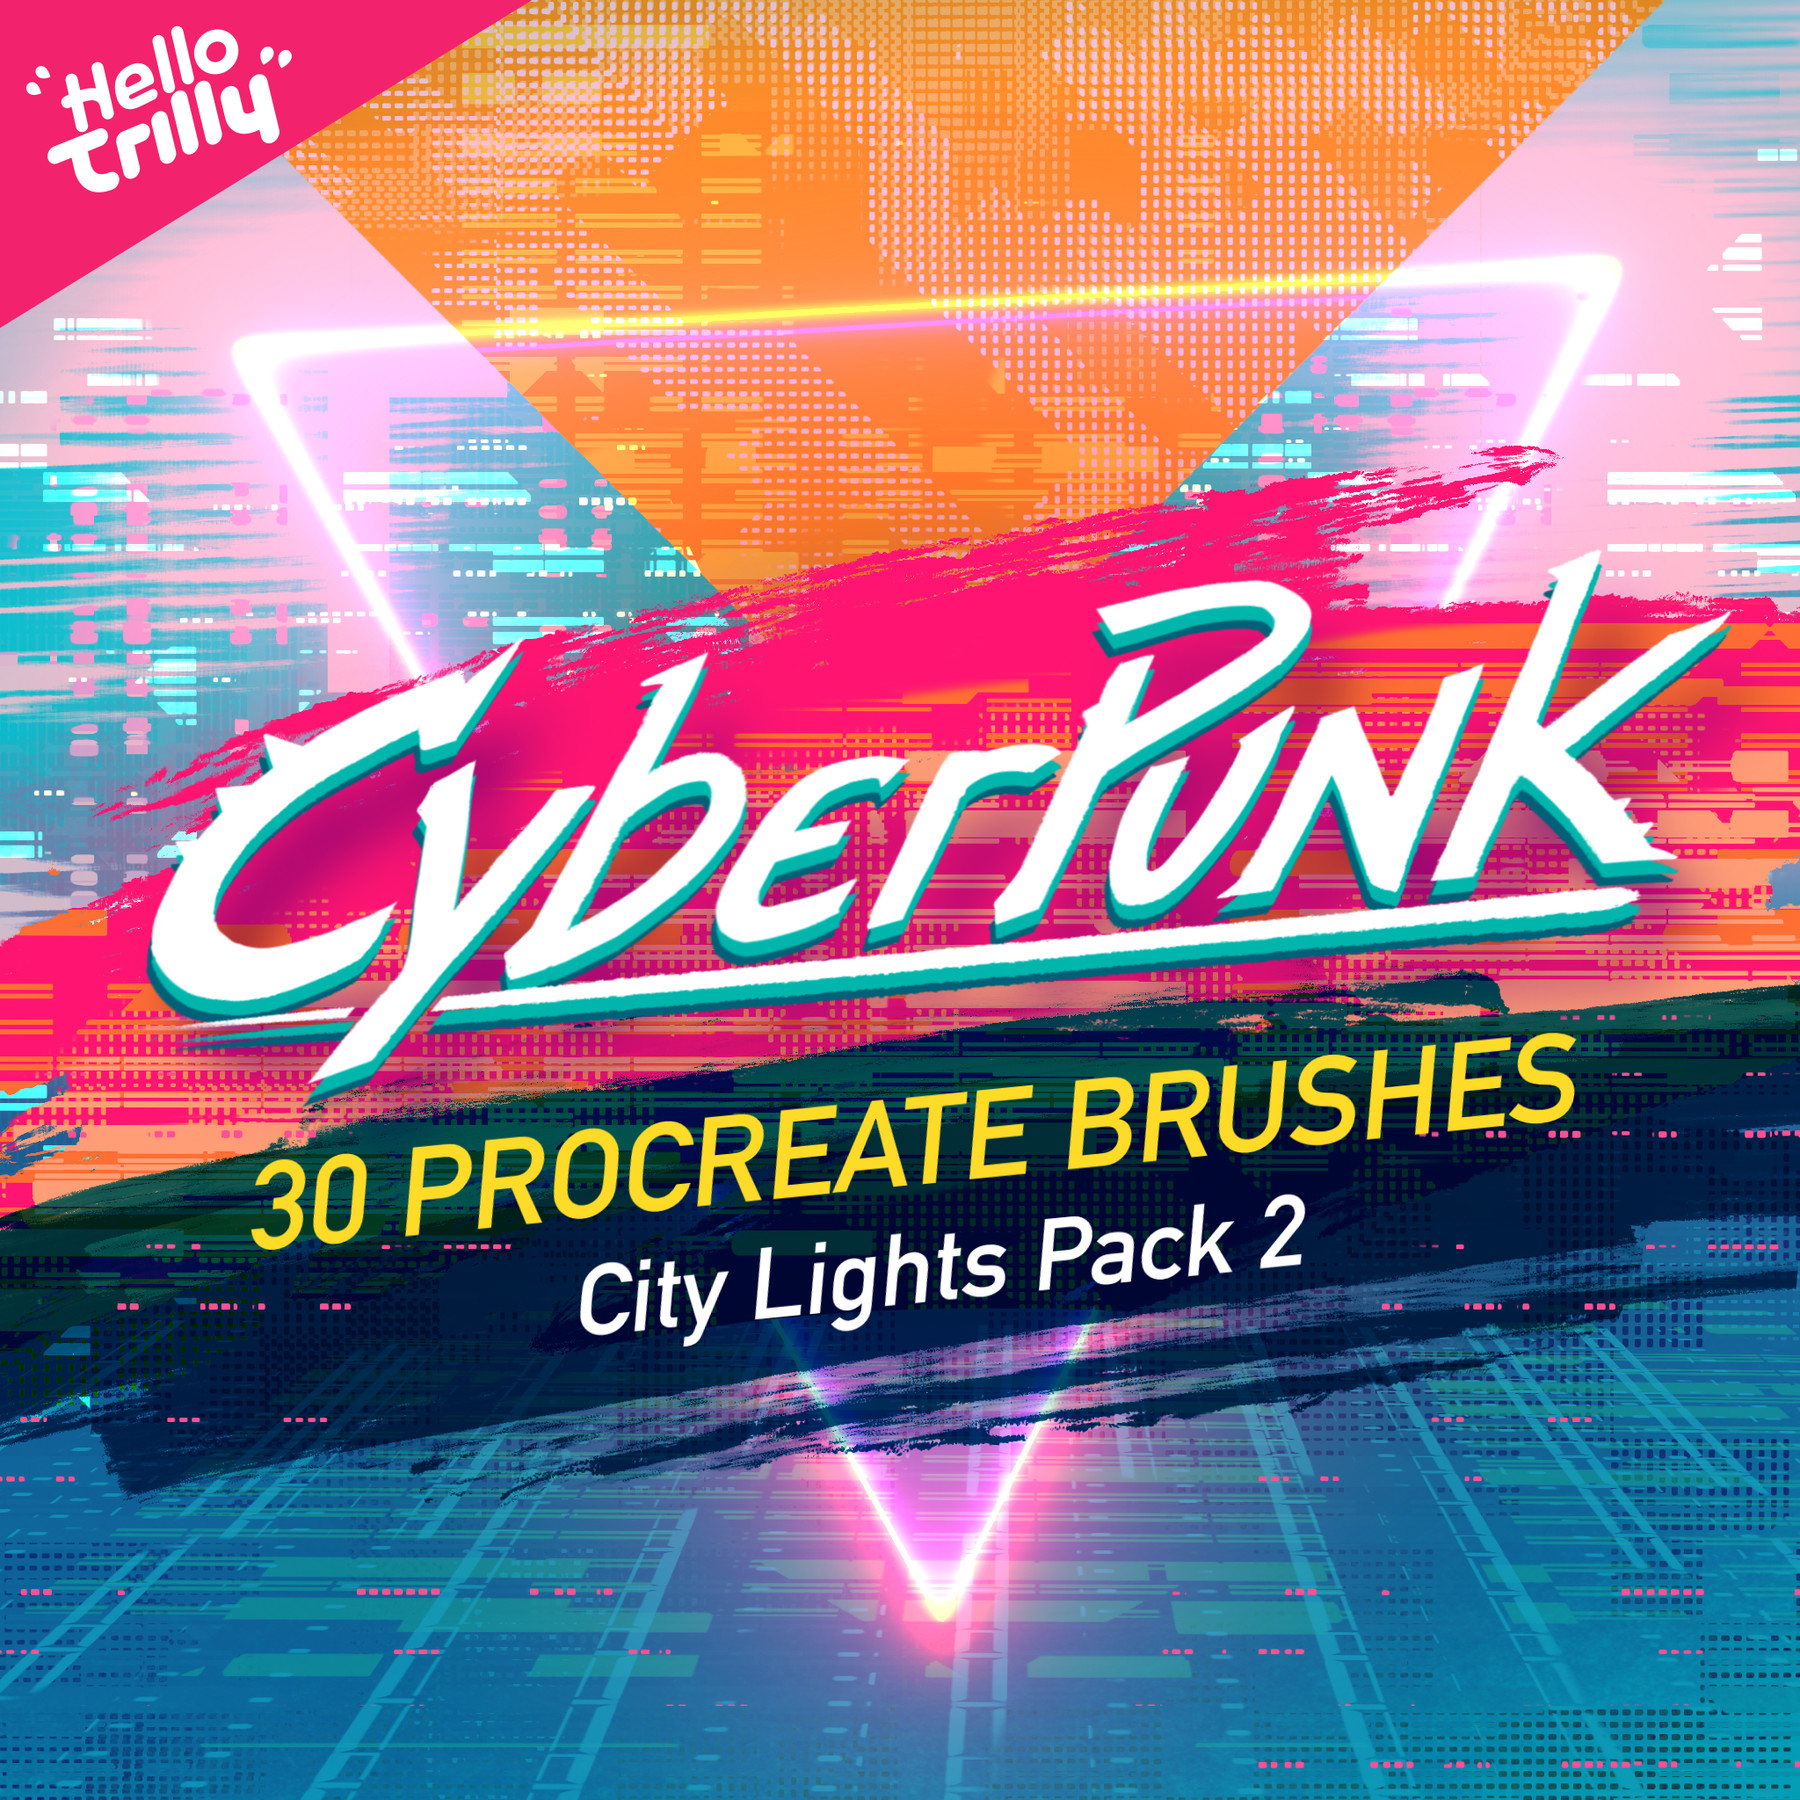 cyberpunk brushes procreate free